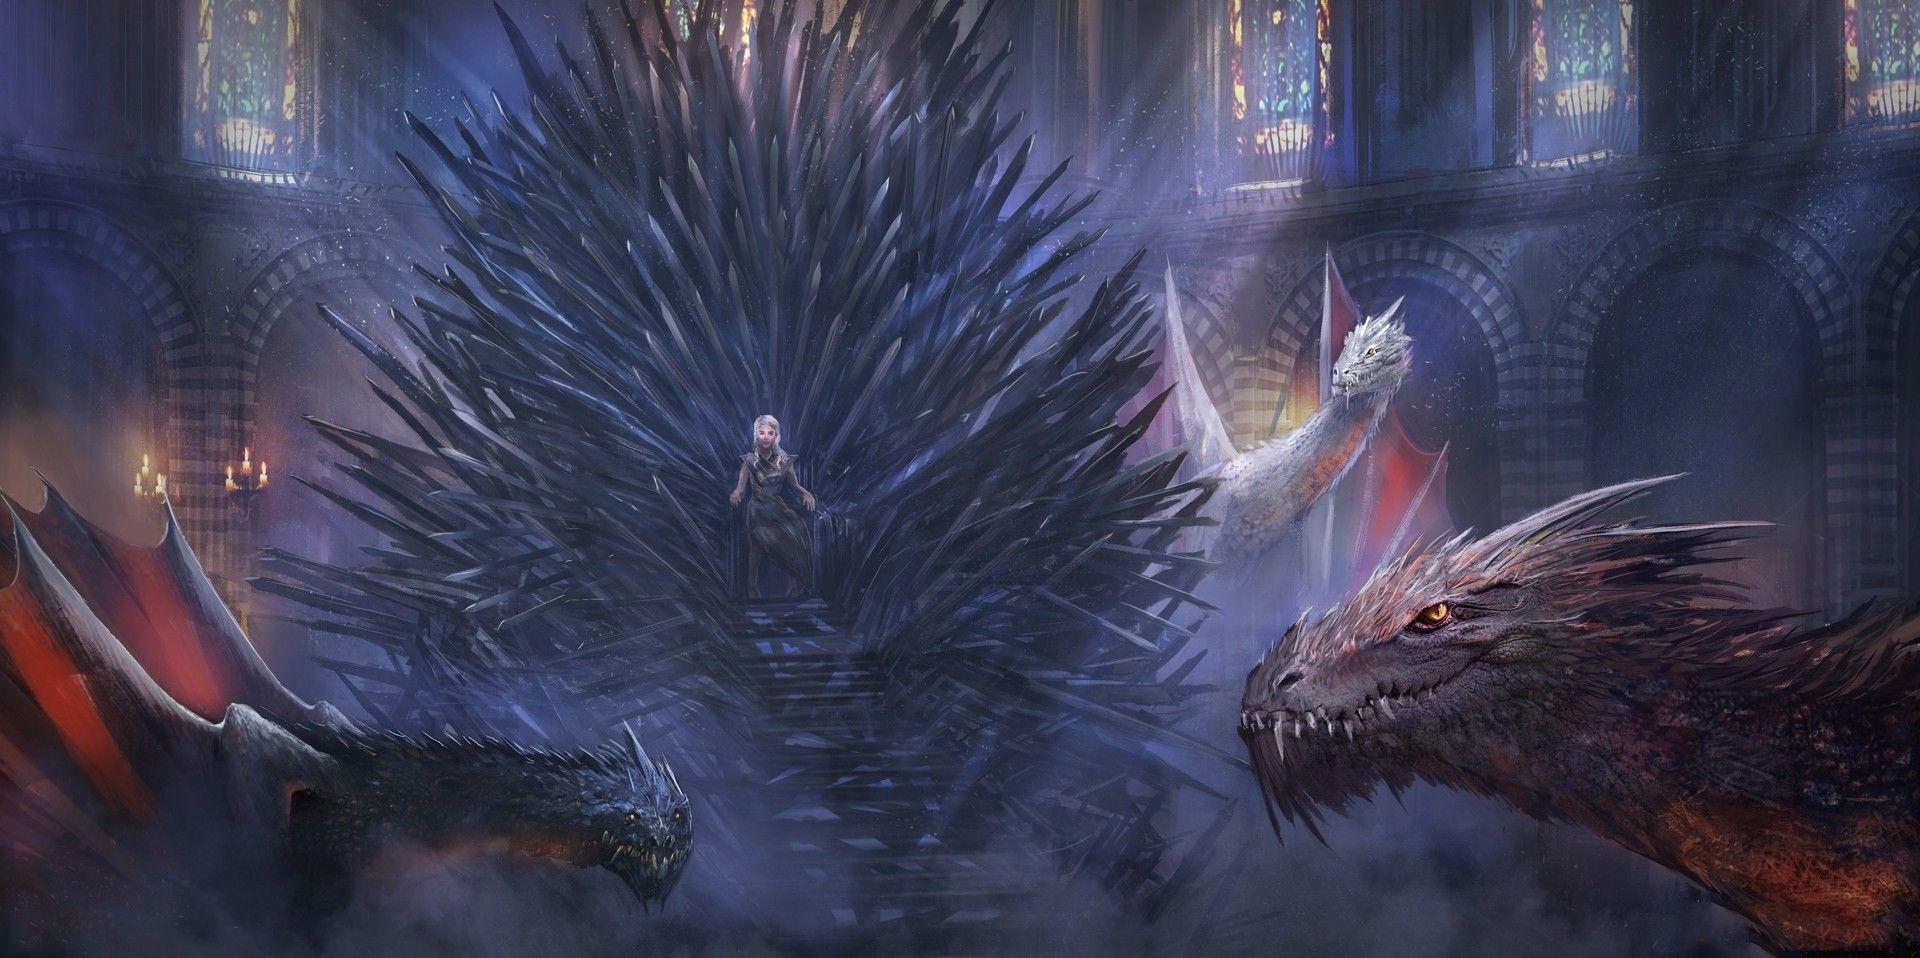 fantasy Art, Game Of Thrones, Daenerys Targaryen, Iron Throne